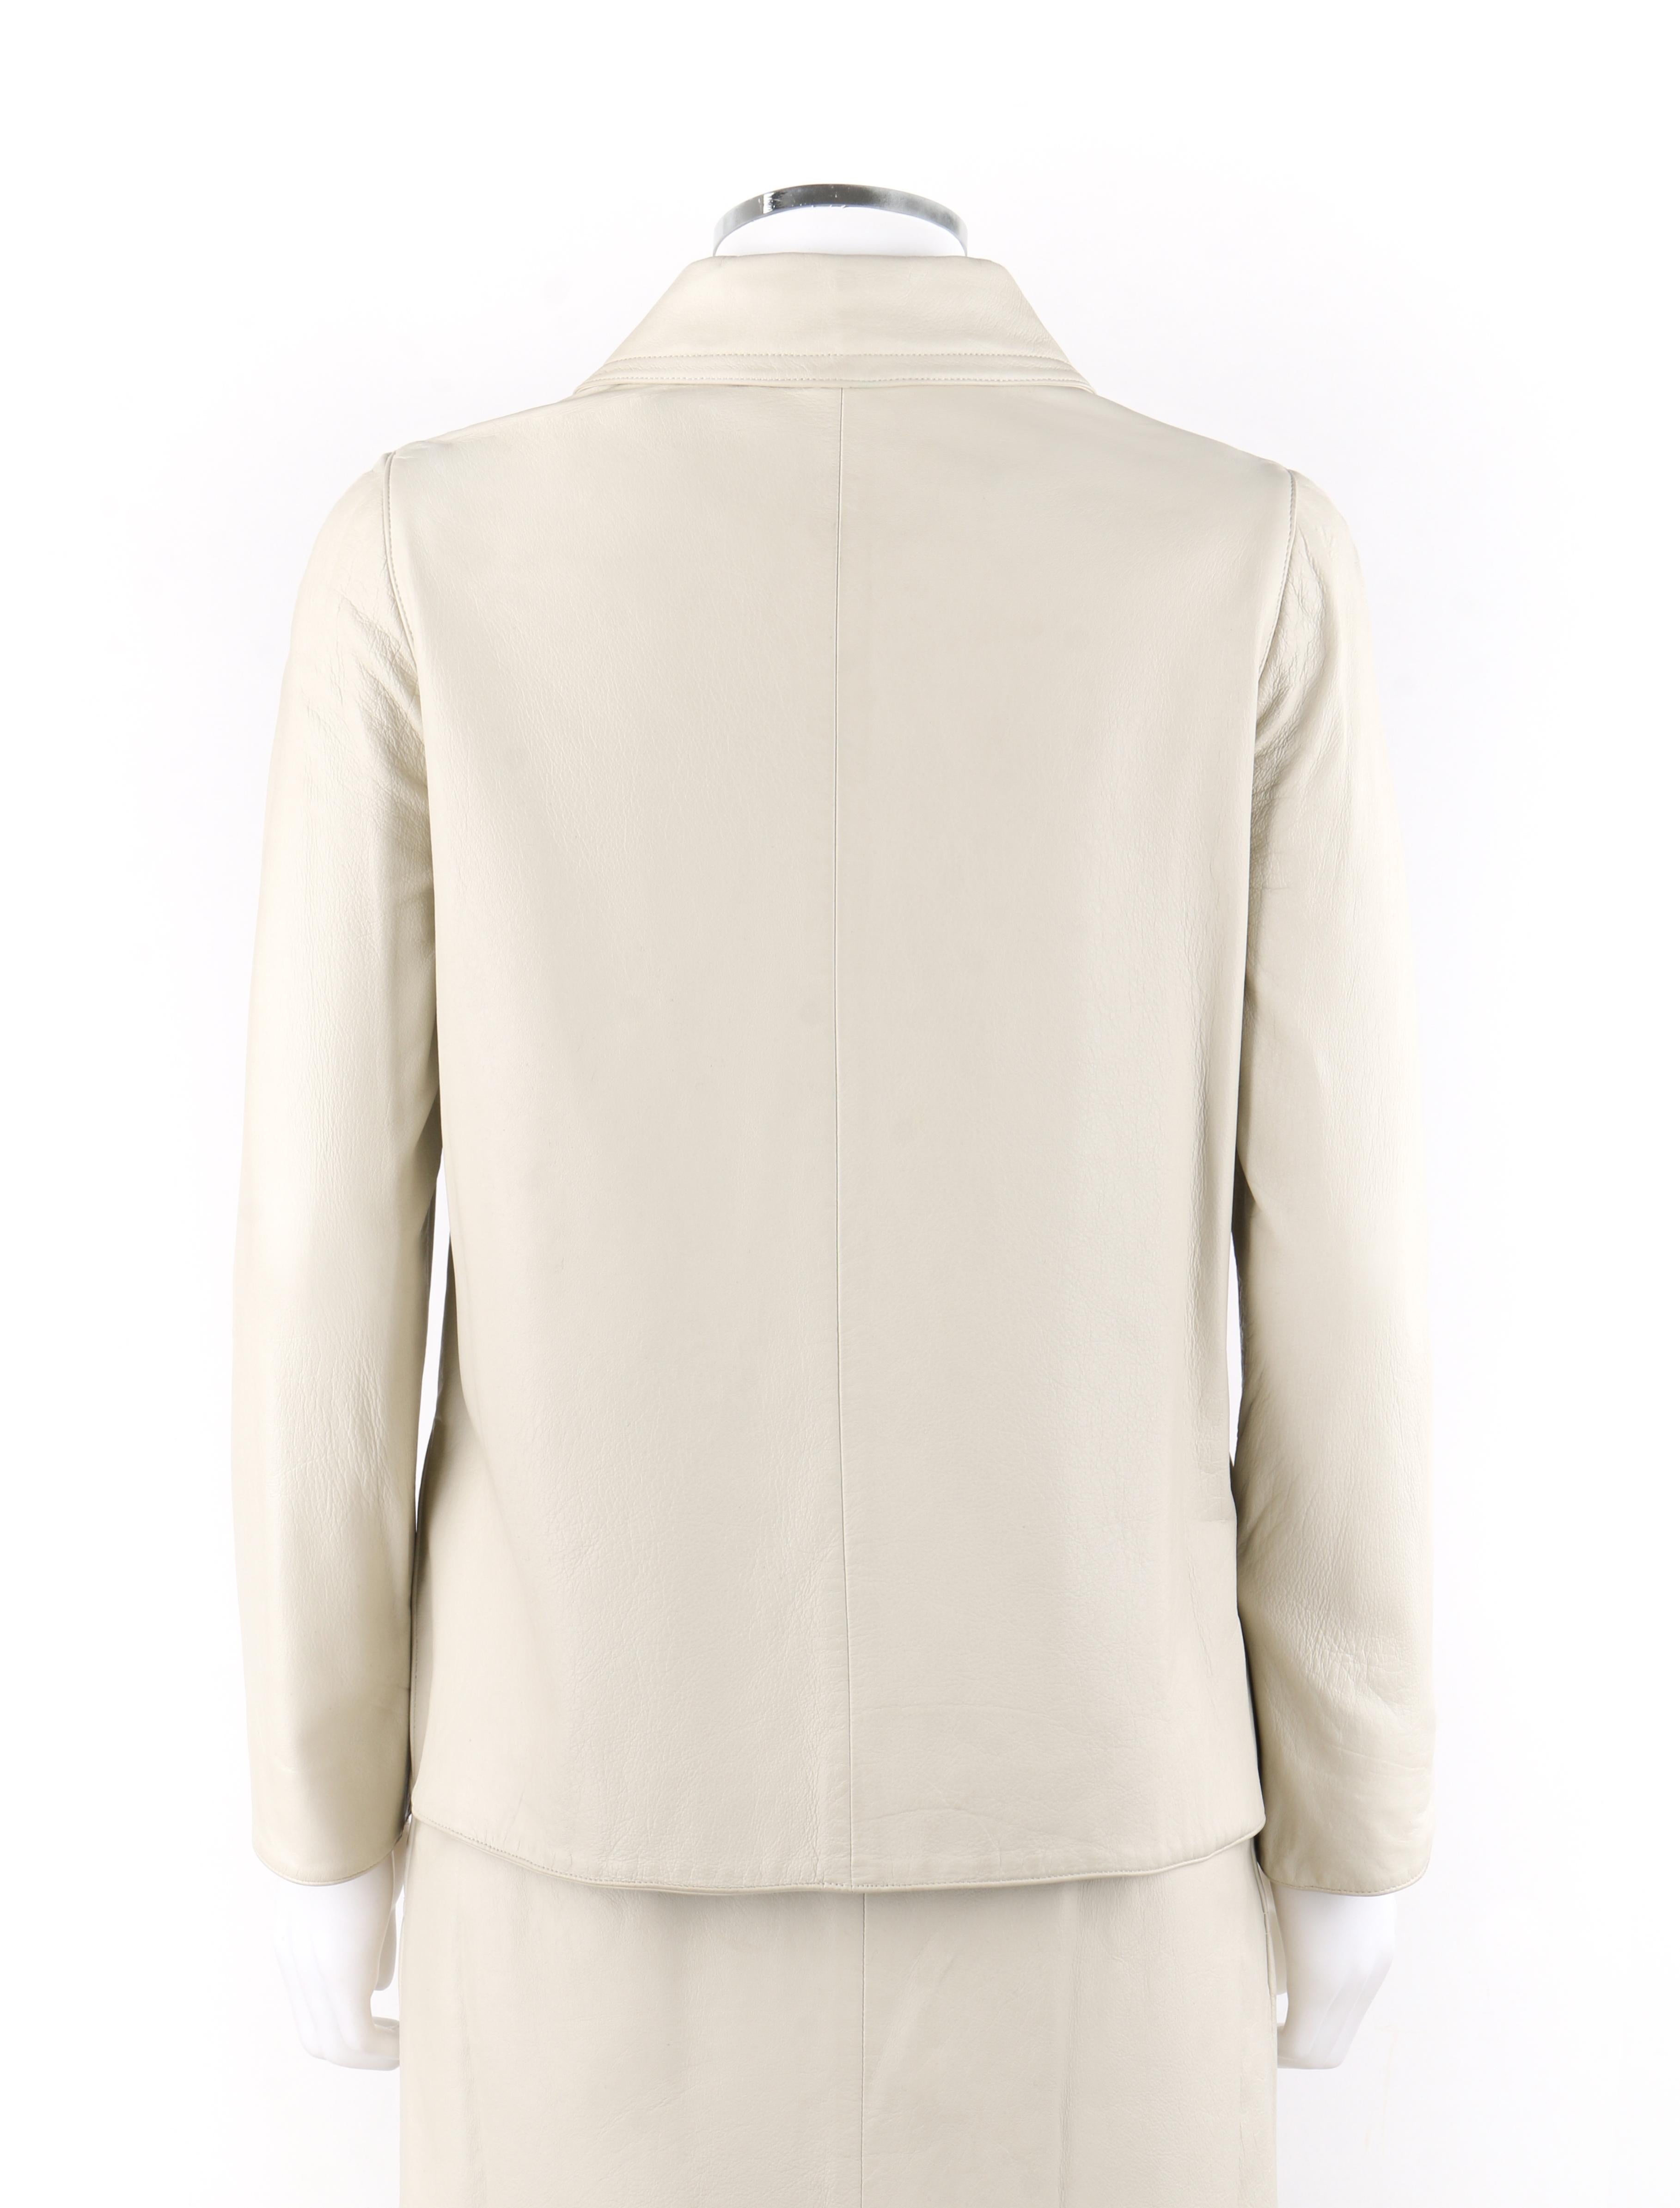 BONNIE CASHIN c.1970’s Sills Off-White Leather Gold Twist Lock Jacket Skirt Set In Good Condition For Sale In Thiensville, WI